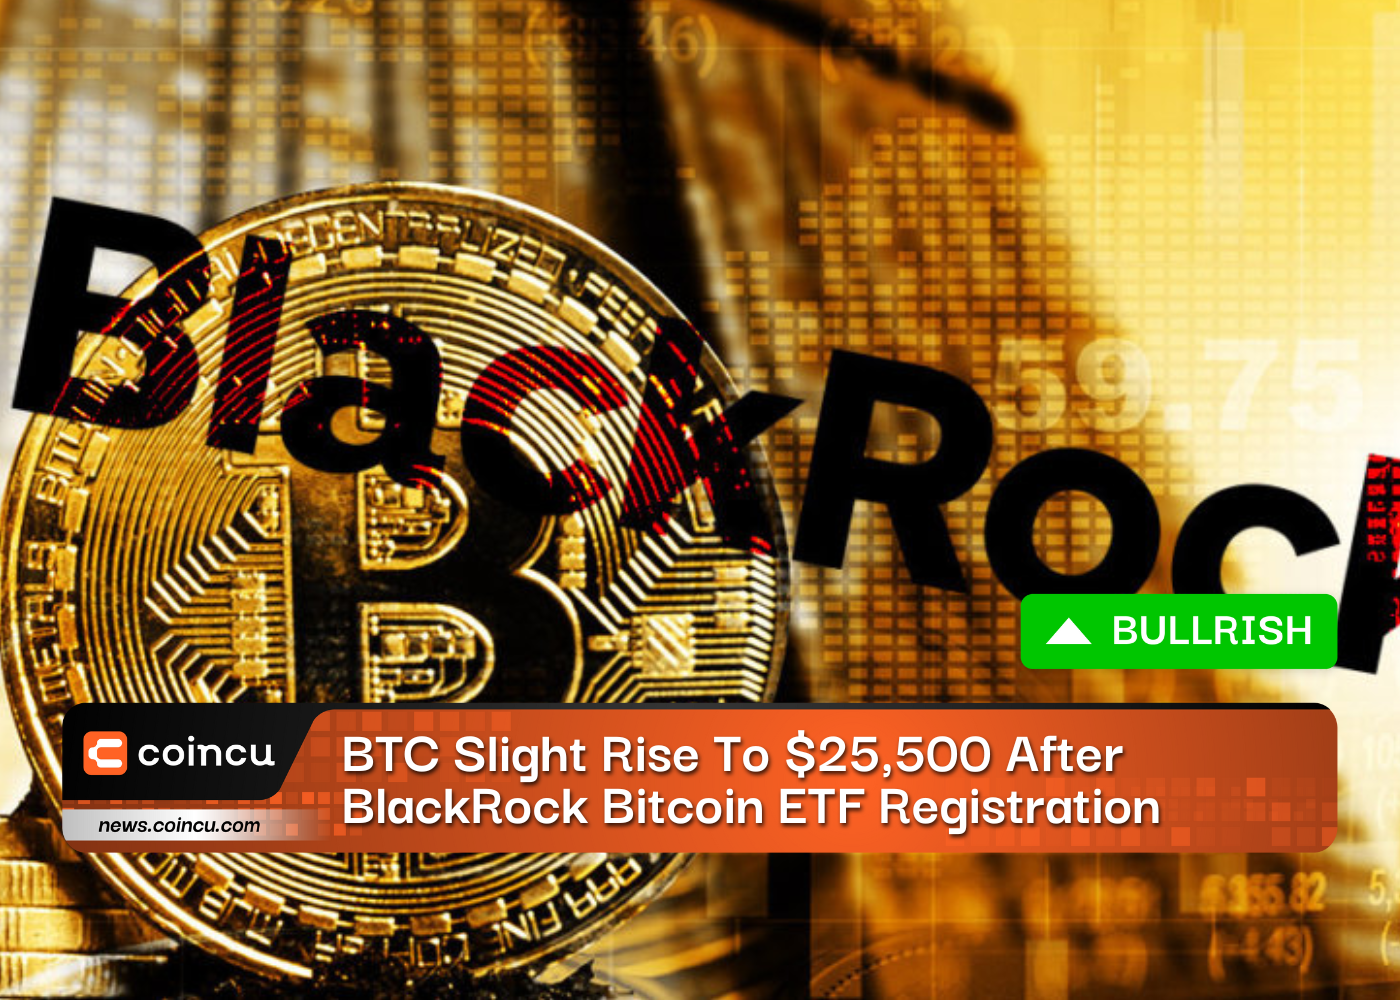 BTC Slight Rise To $25,500 After BlackRock Bitcoin ETF Registration